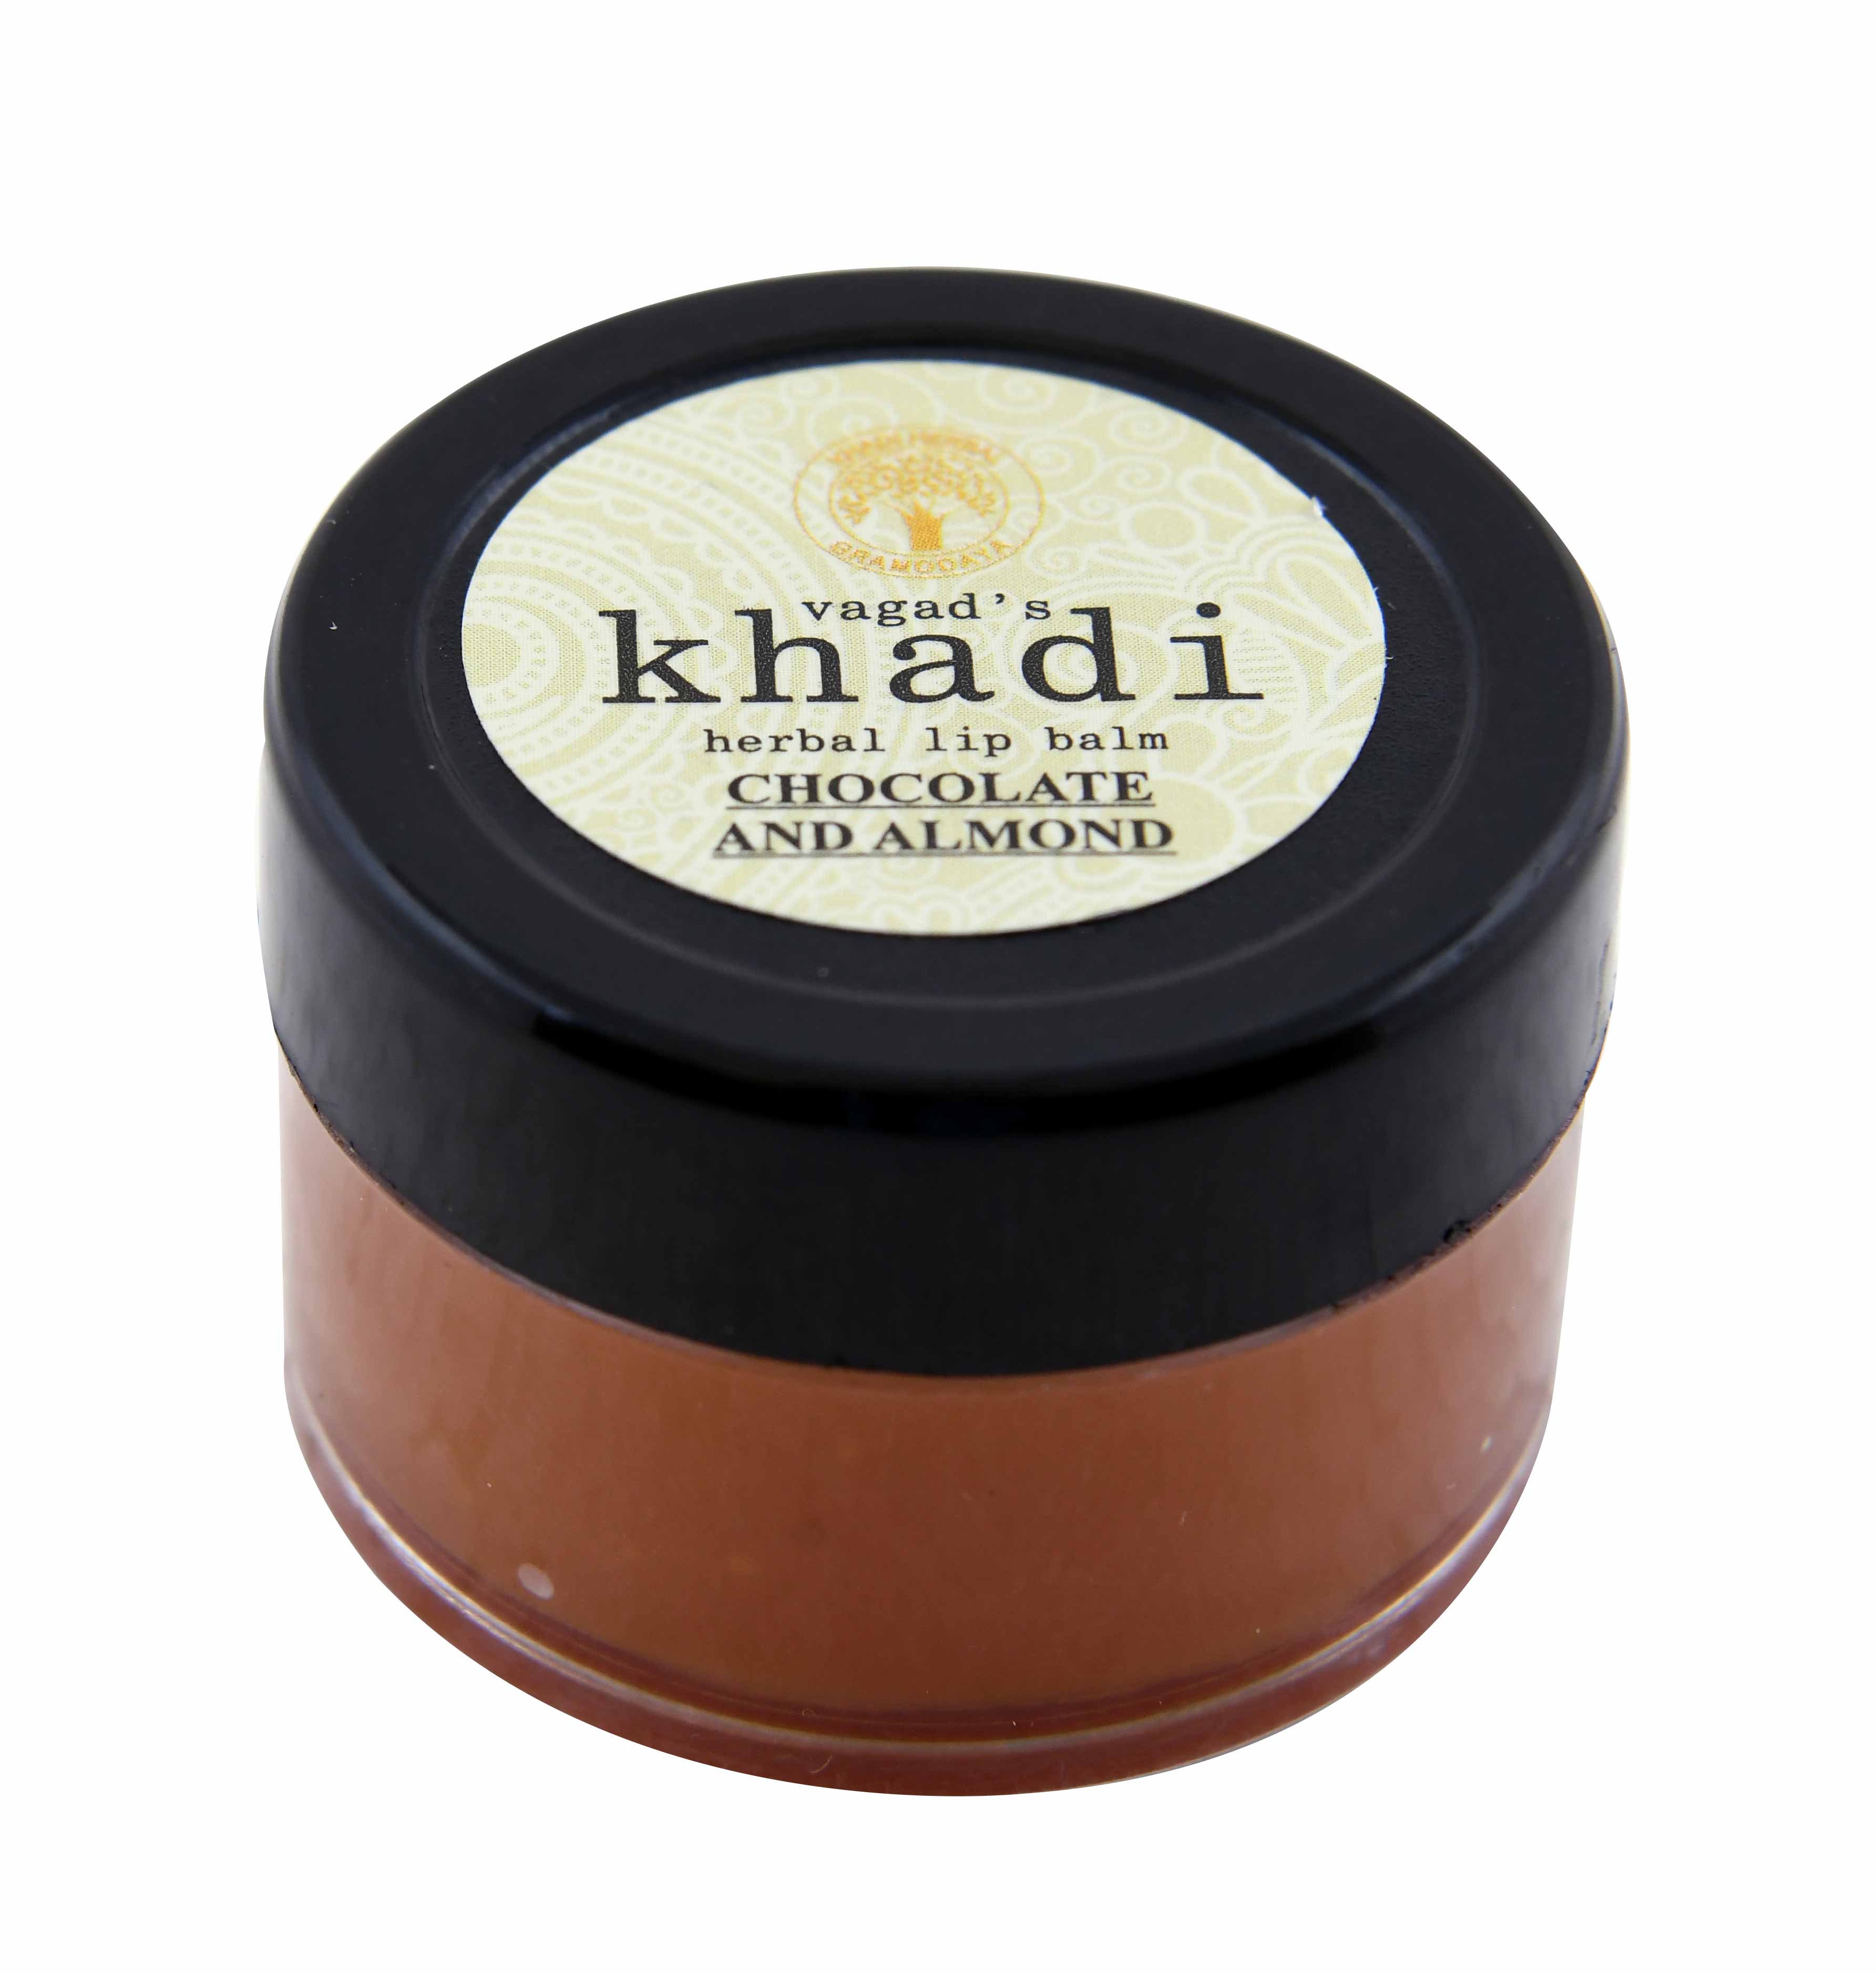 Buy Vagad's Khadi Chocolate And Almond Lip Balm at Best Price Online